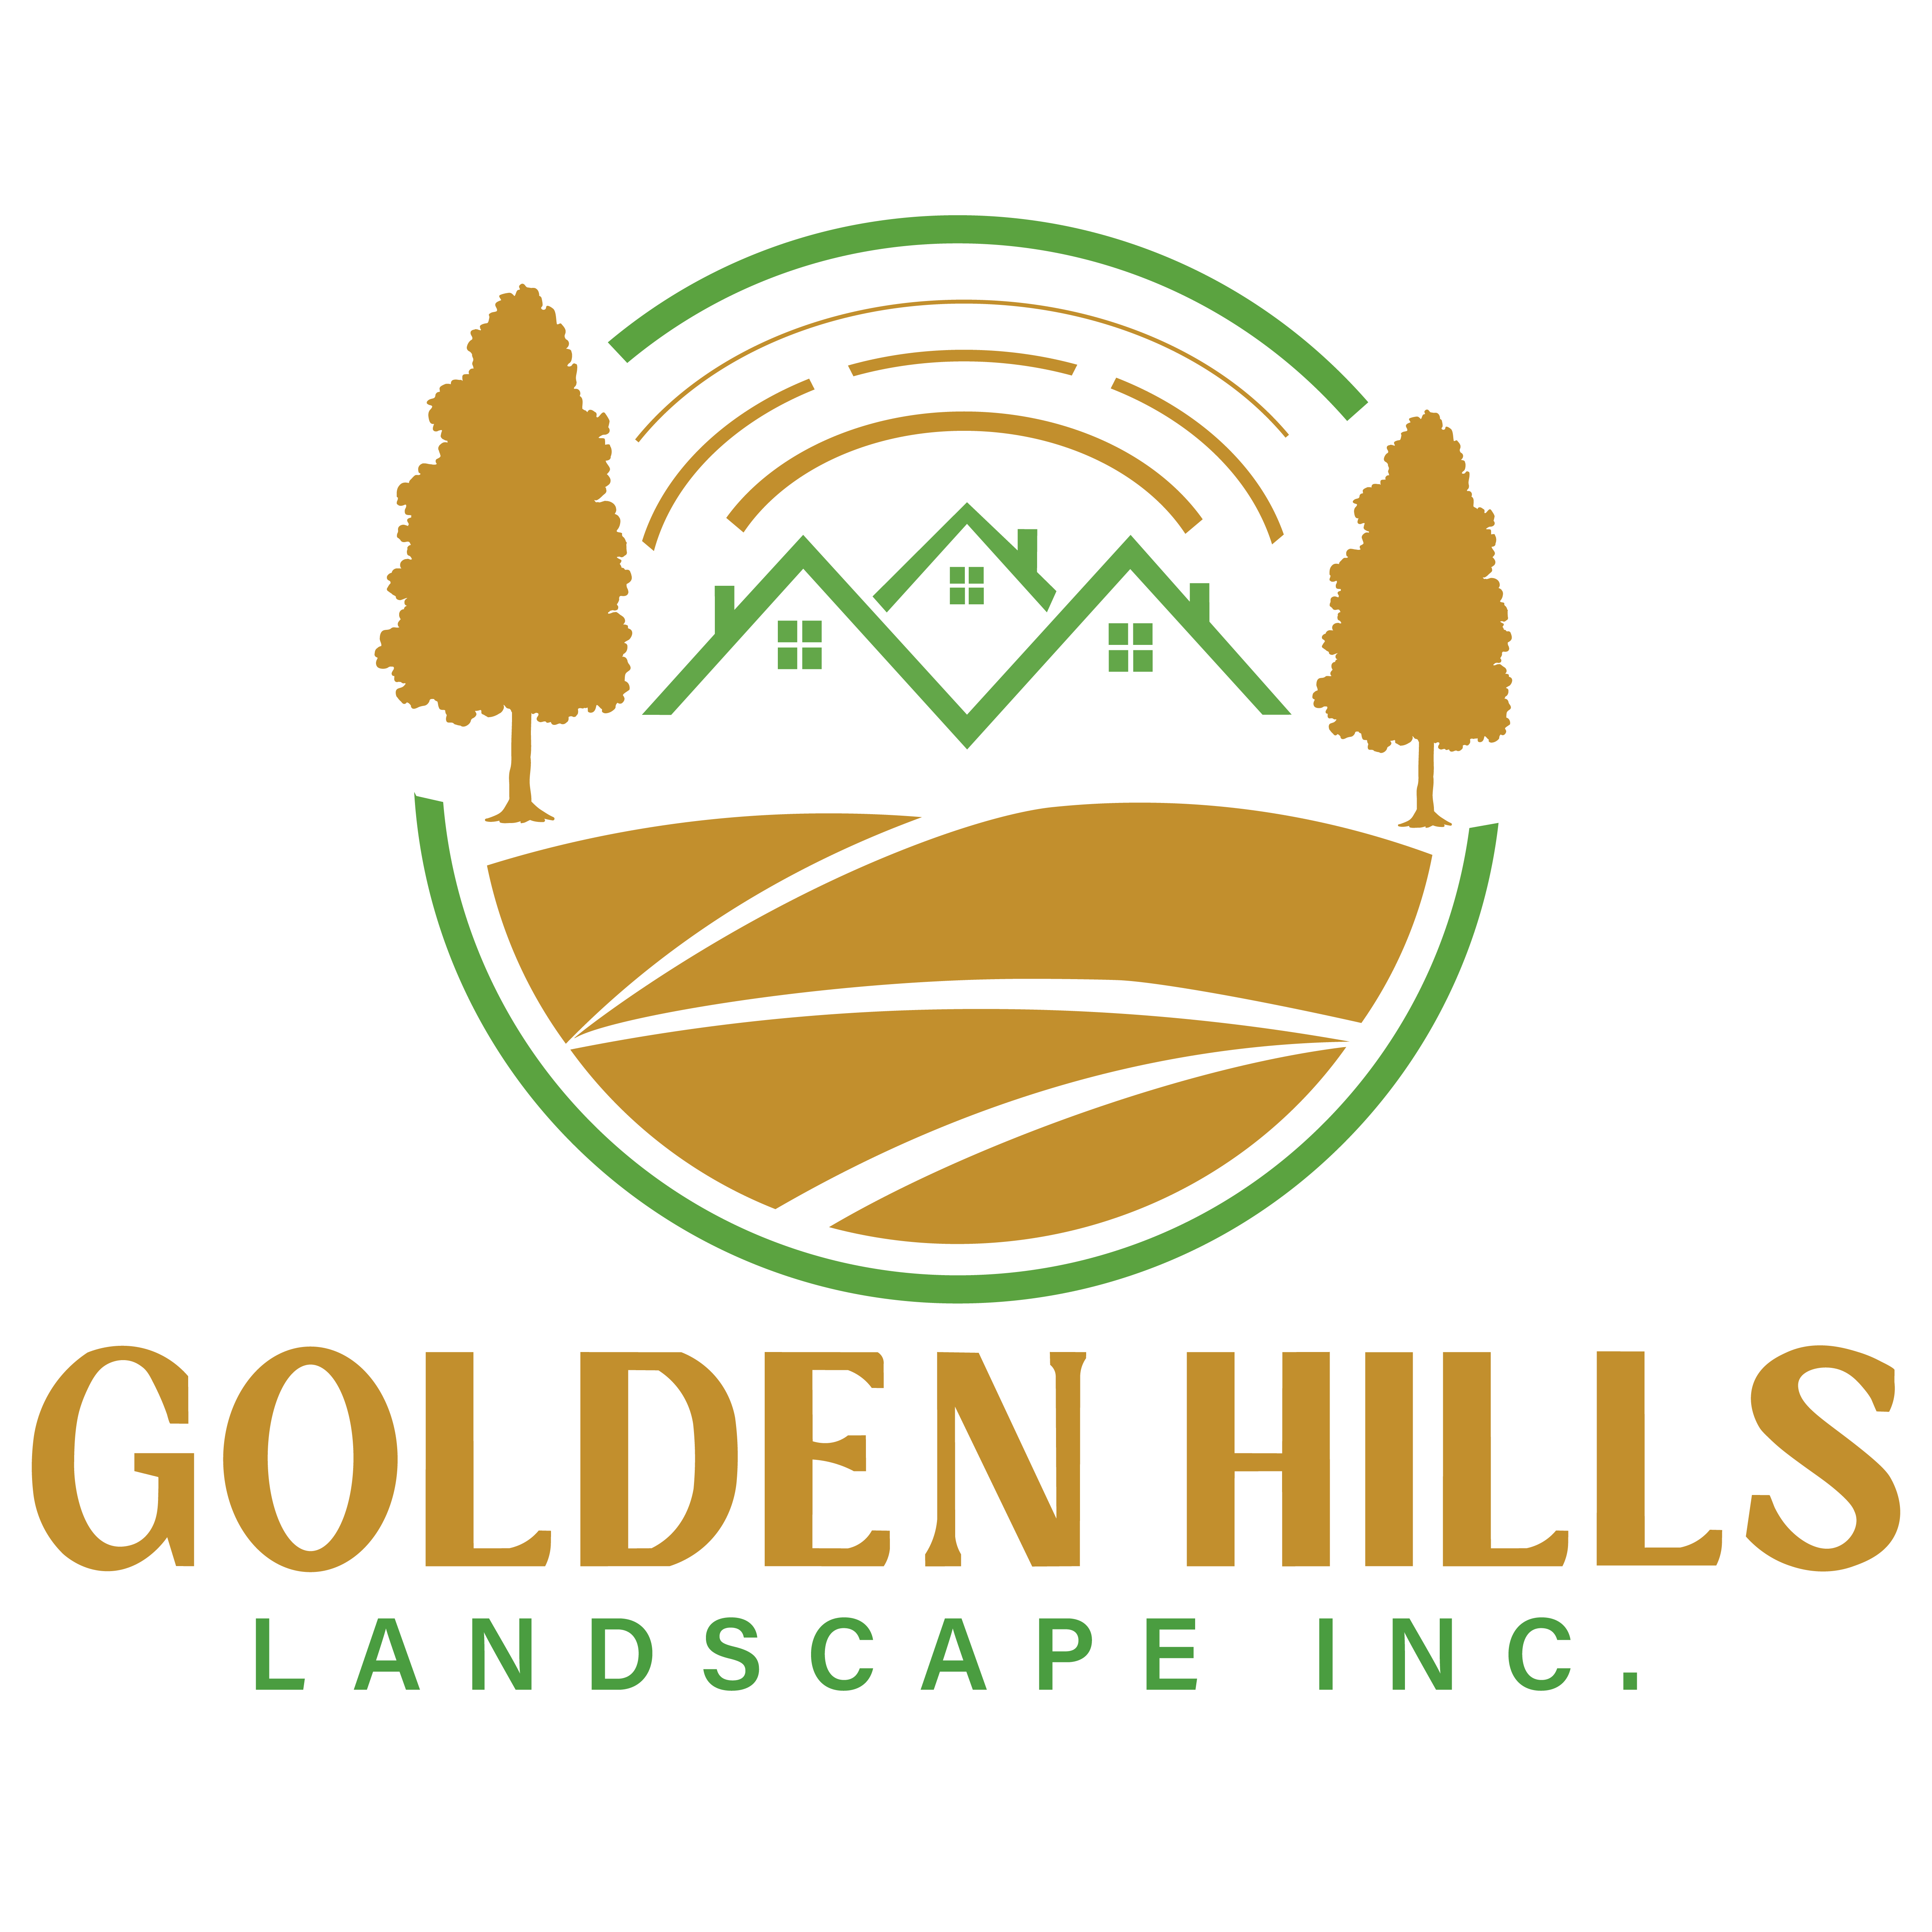 Golden Hills Landscape Inc. Landscaping And Tree Service